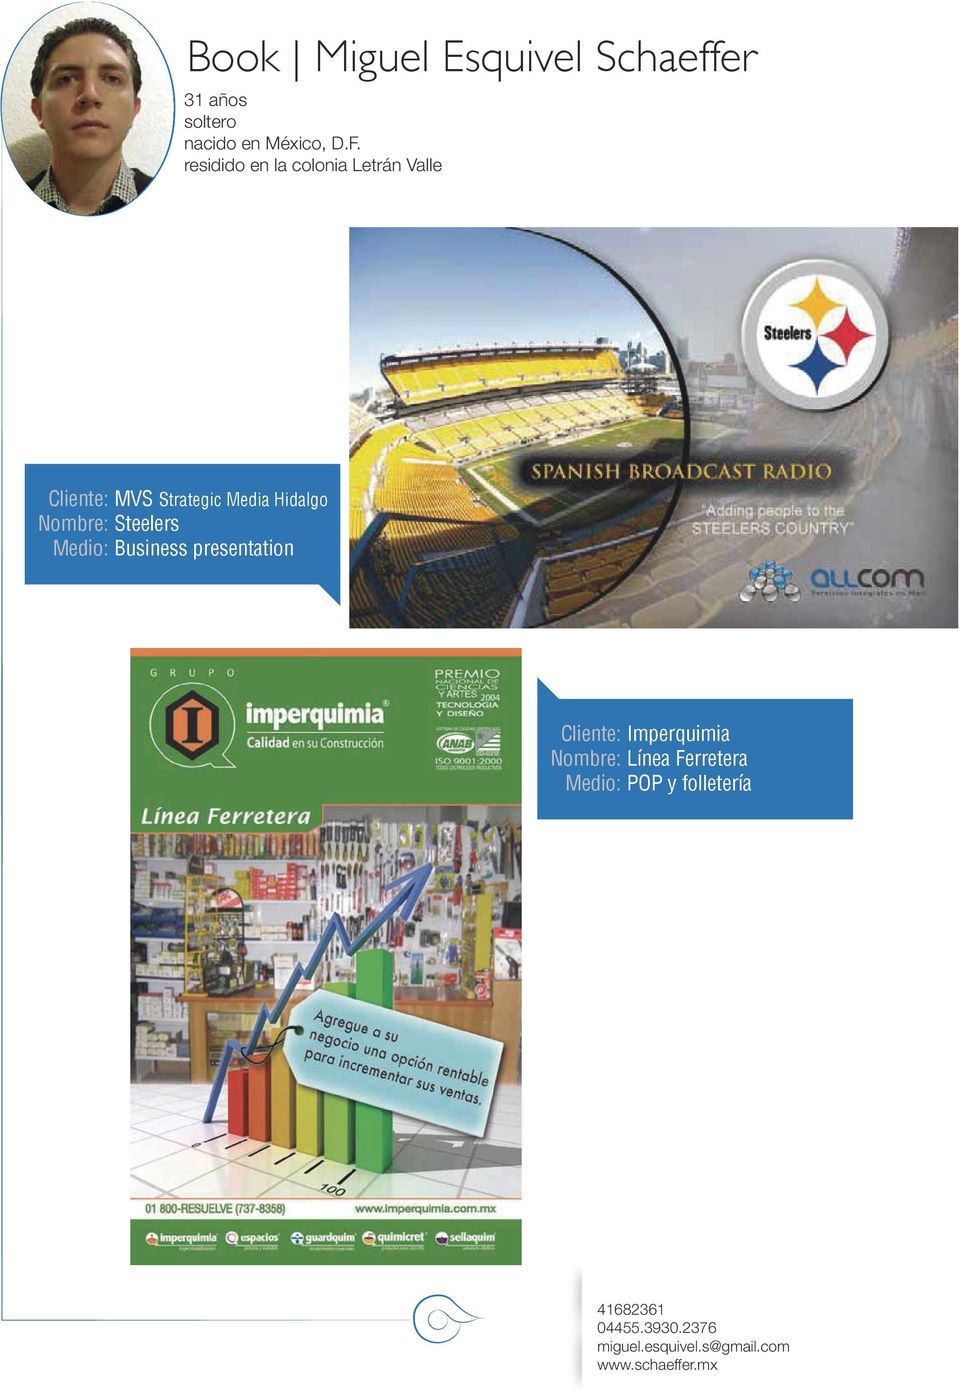 Steelers Medio: Business presentation